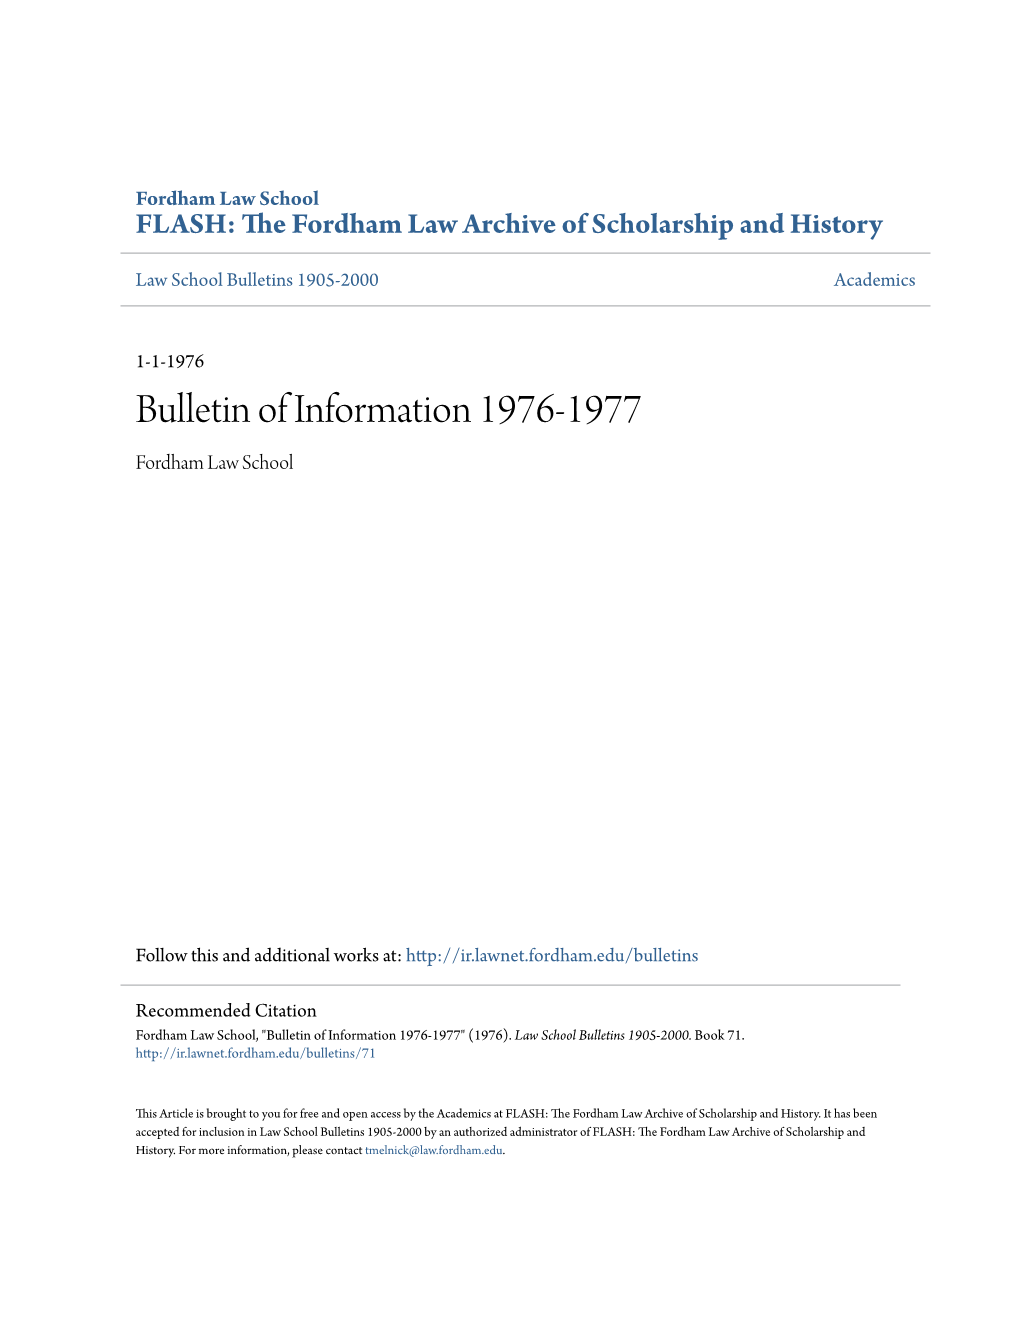 Bulletin of Information 1976-1977 Fordham Law School